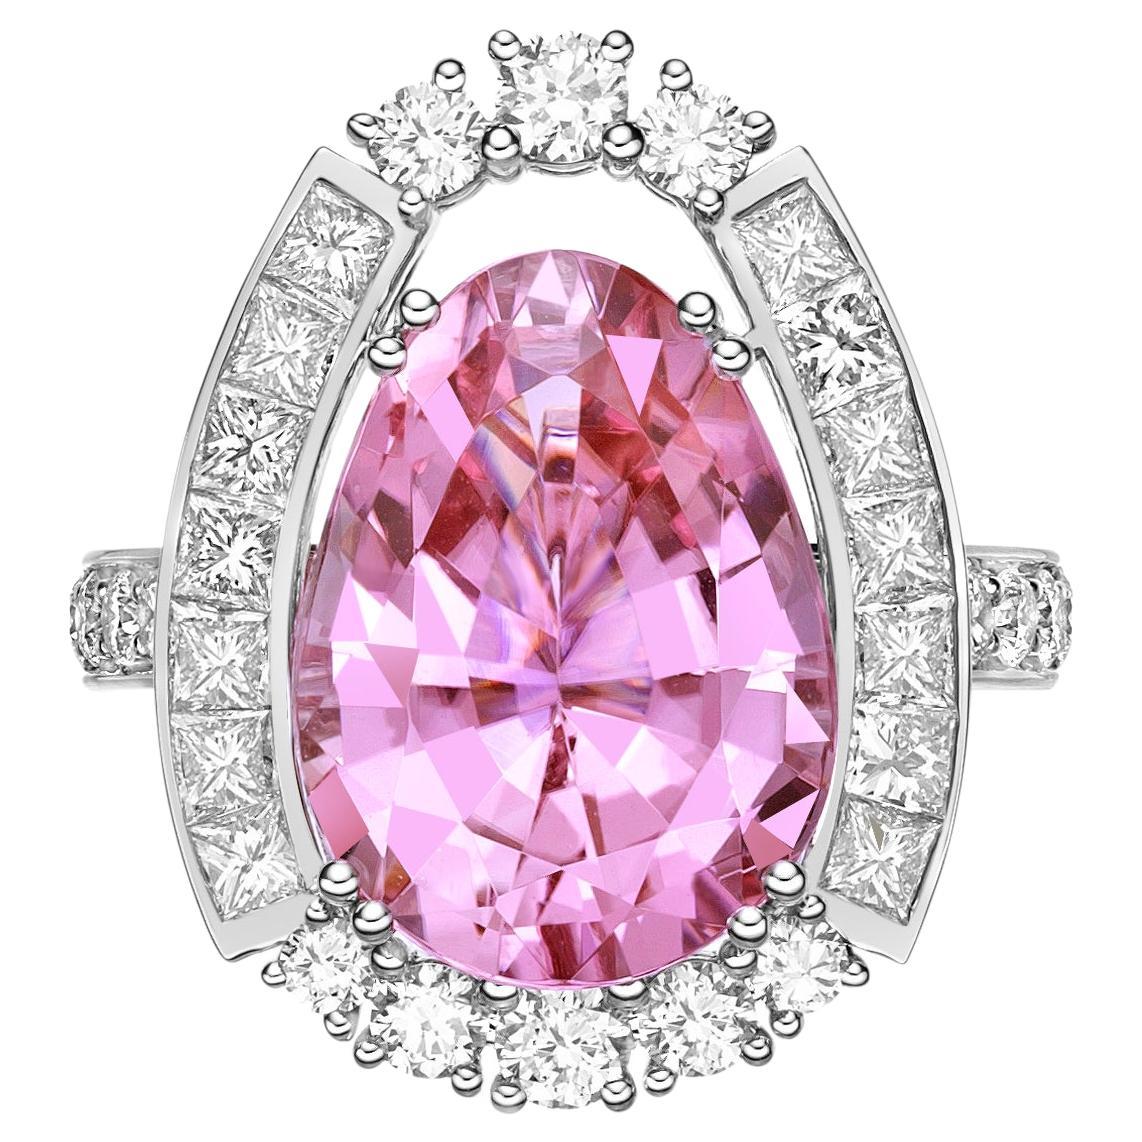 7.77 Carat Pink Tourmaline Ring in 18Karat White Gold with Diamond.  For Sale